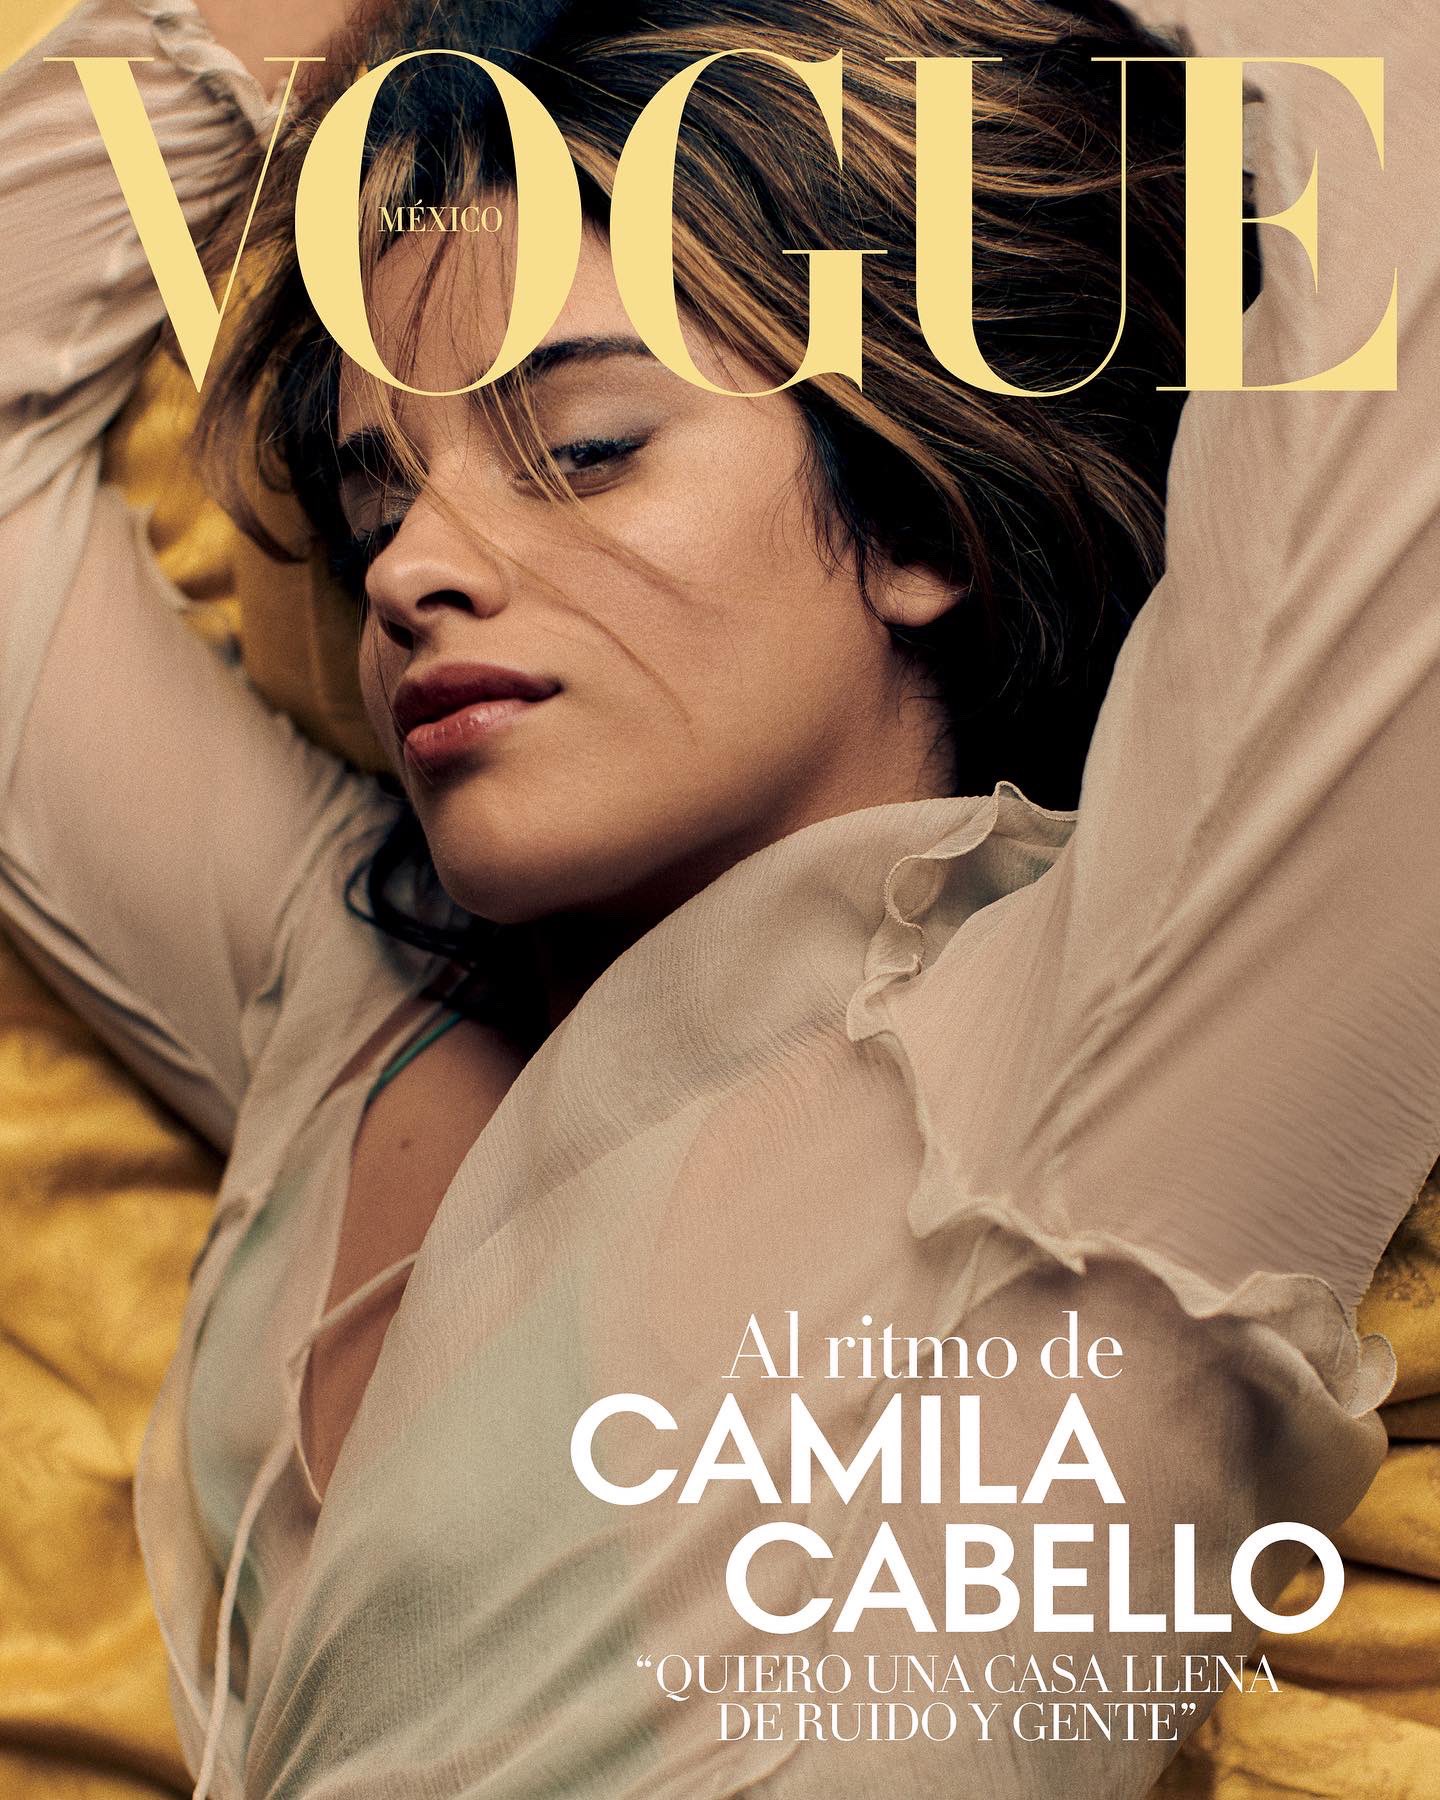 Camila Cabello Stuns for Vogue Mexico - That Grape Juice